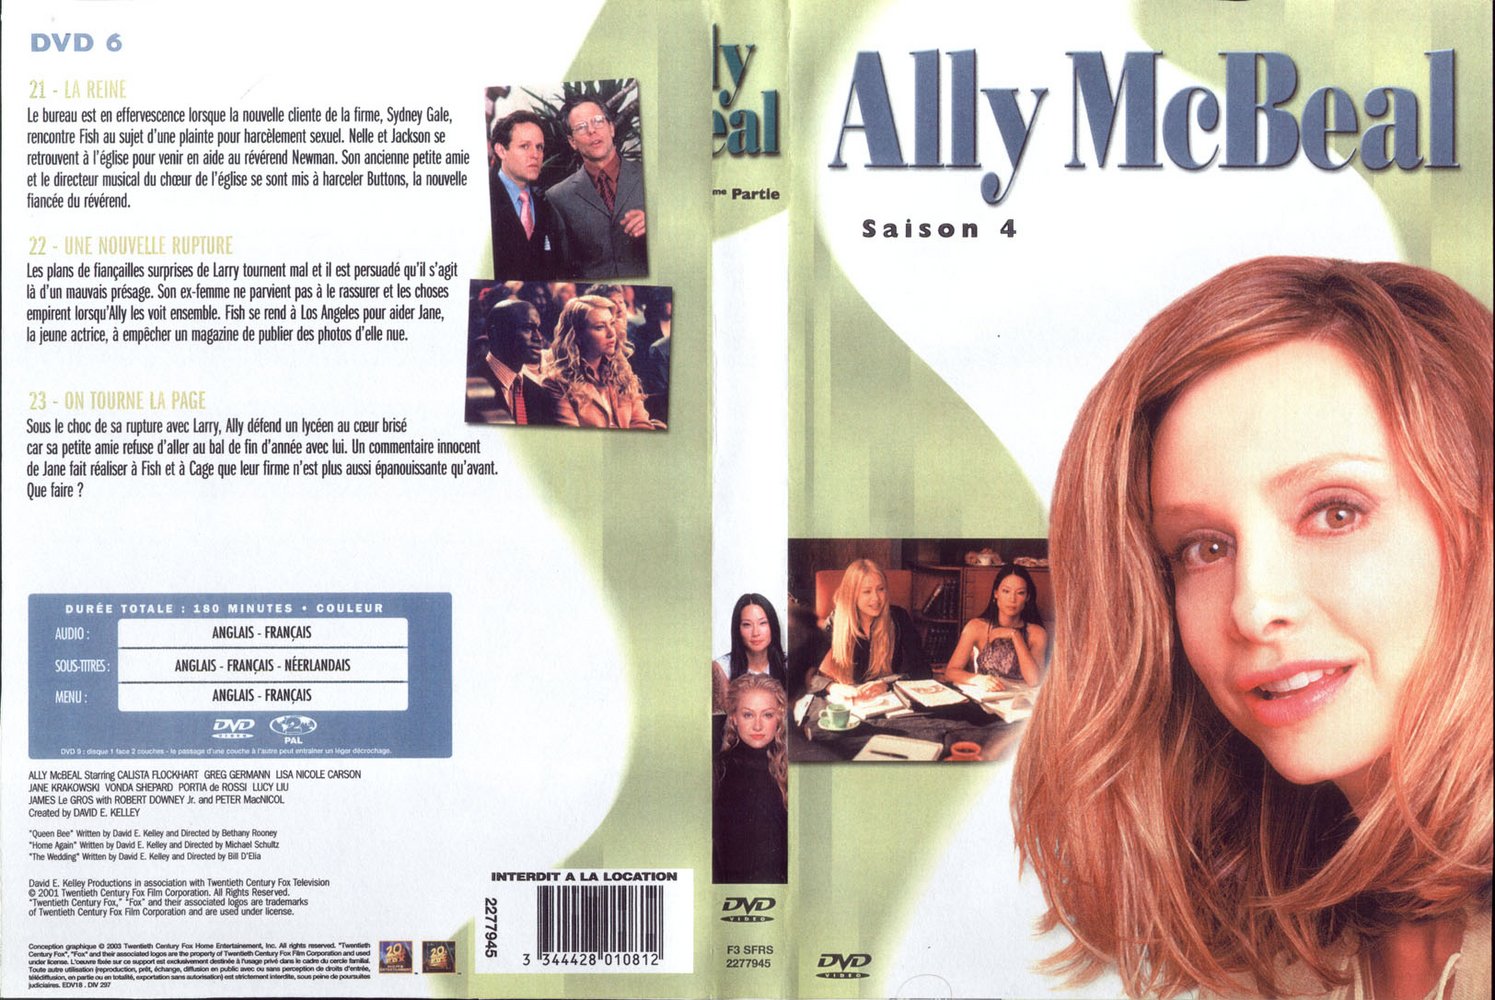 Jaquette DVD Ally McBeal saison 4 dvd 6